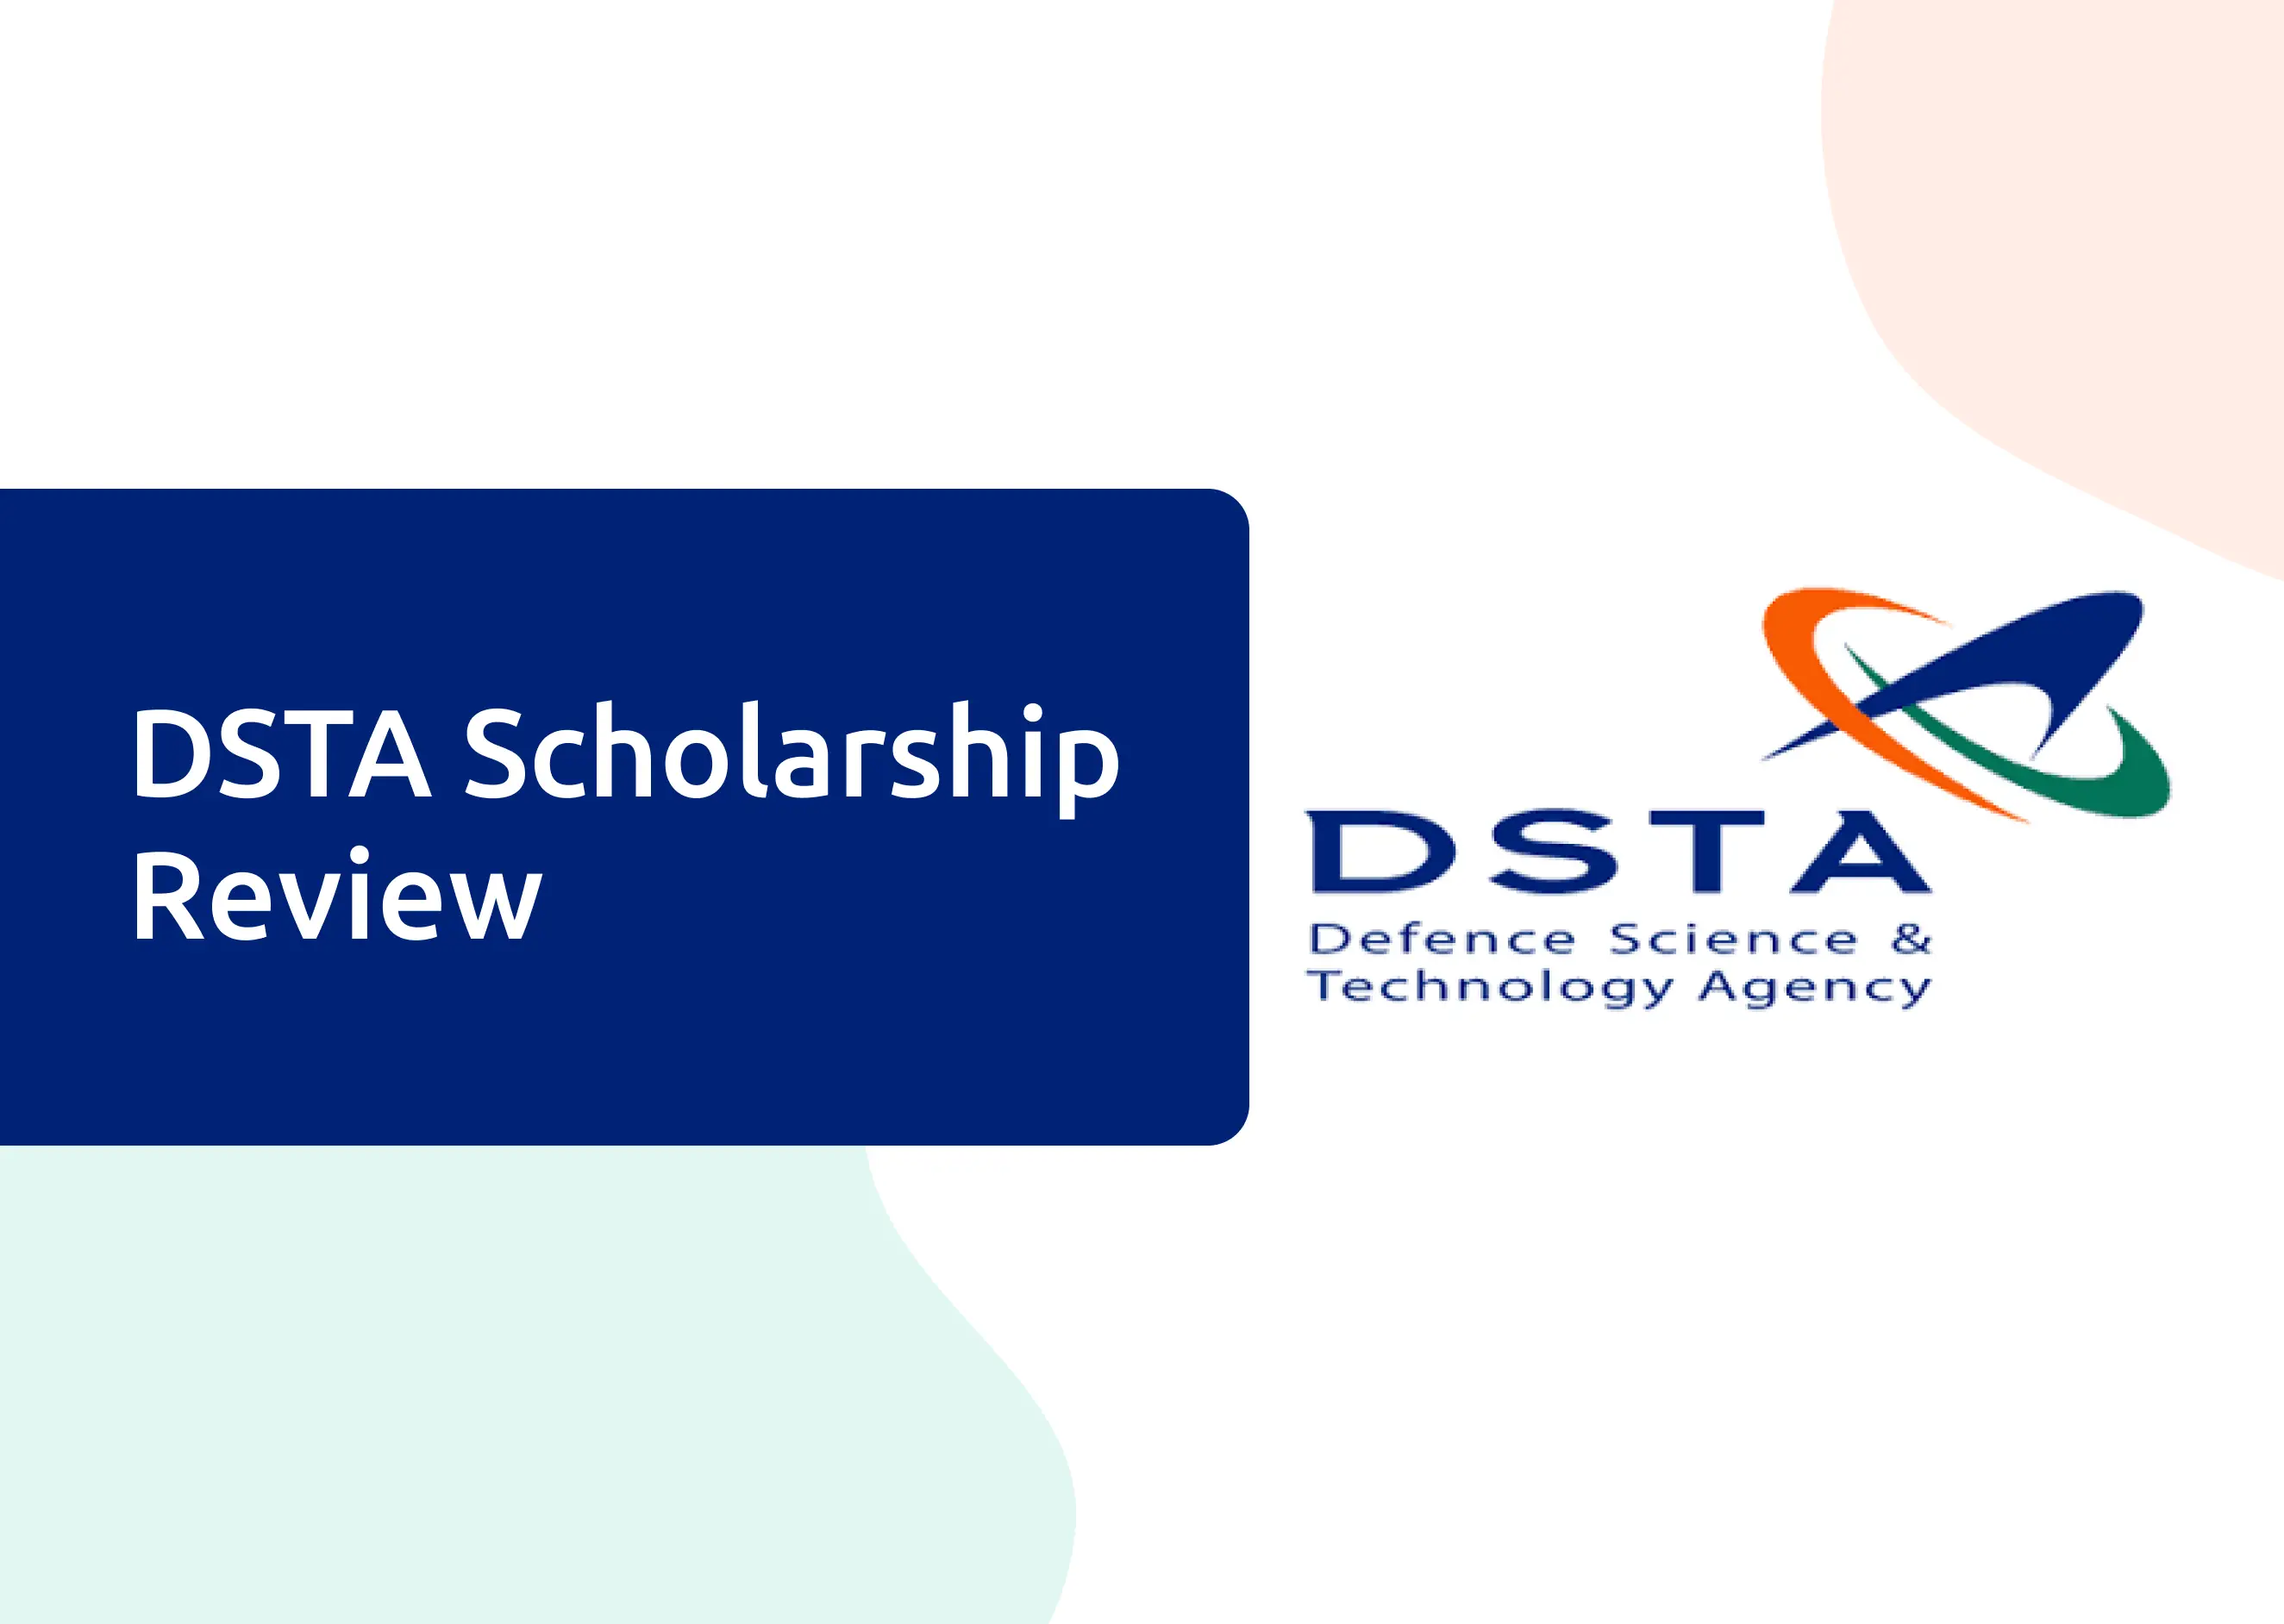 DSTA Scholarship Review